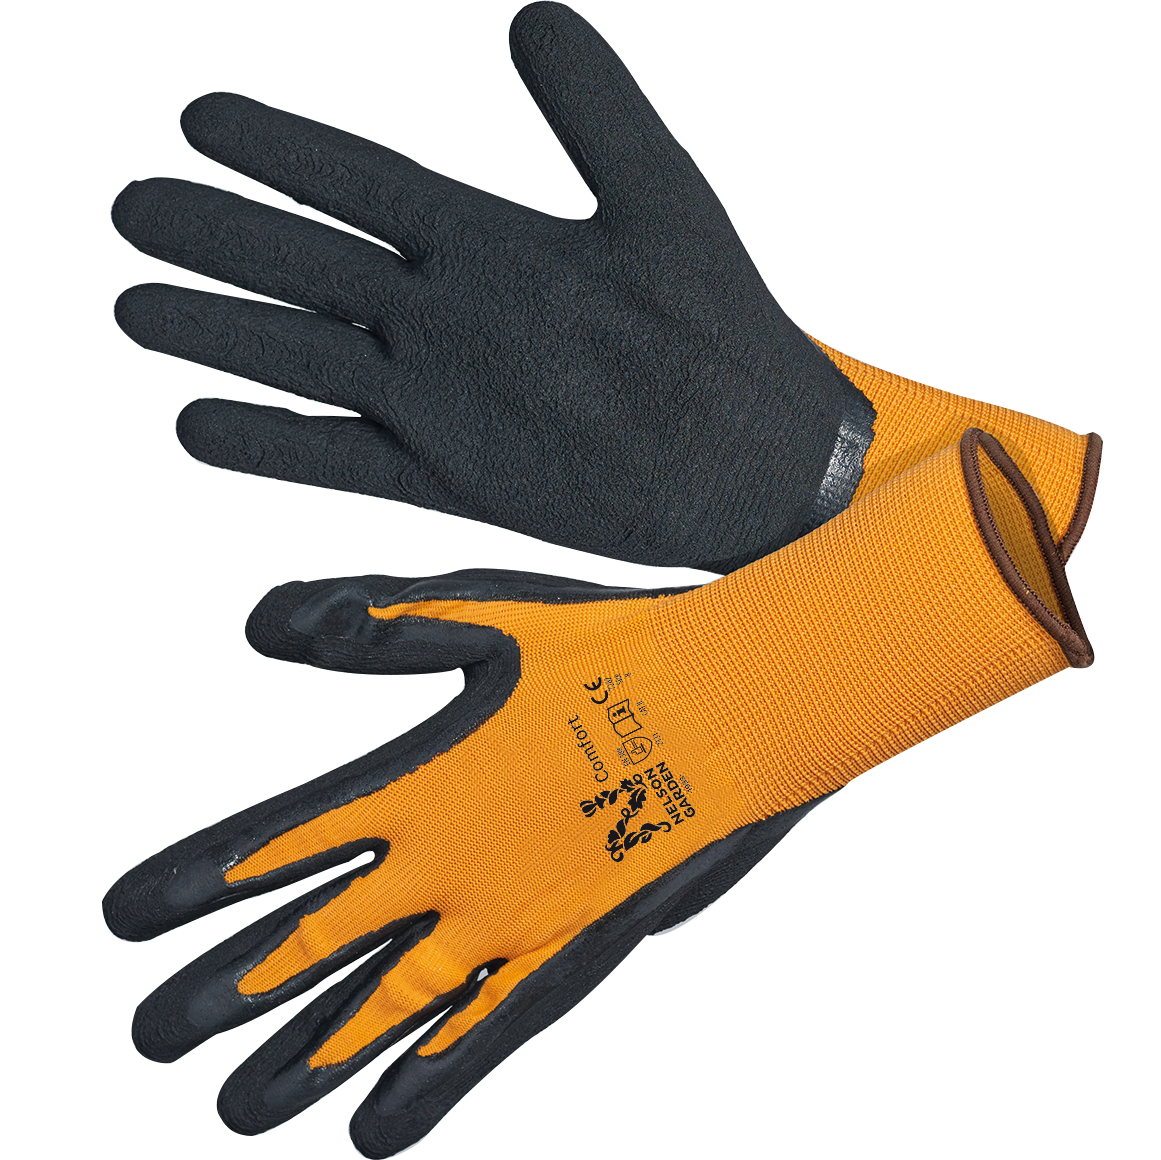 Handske Comfort, orange/svart stl 10